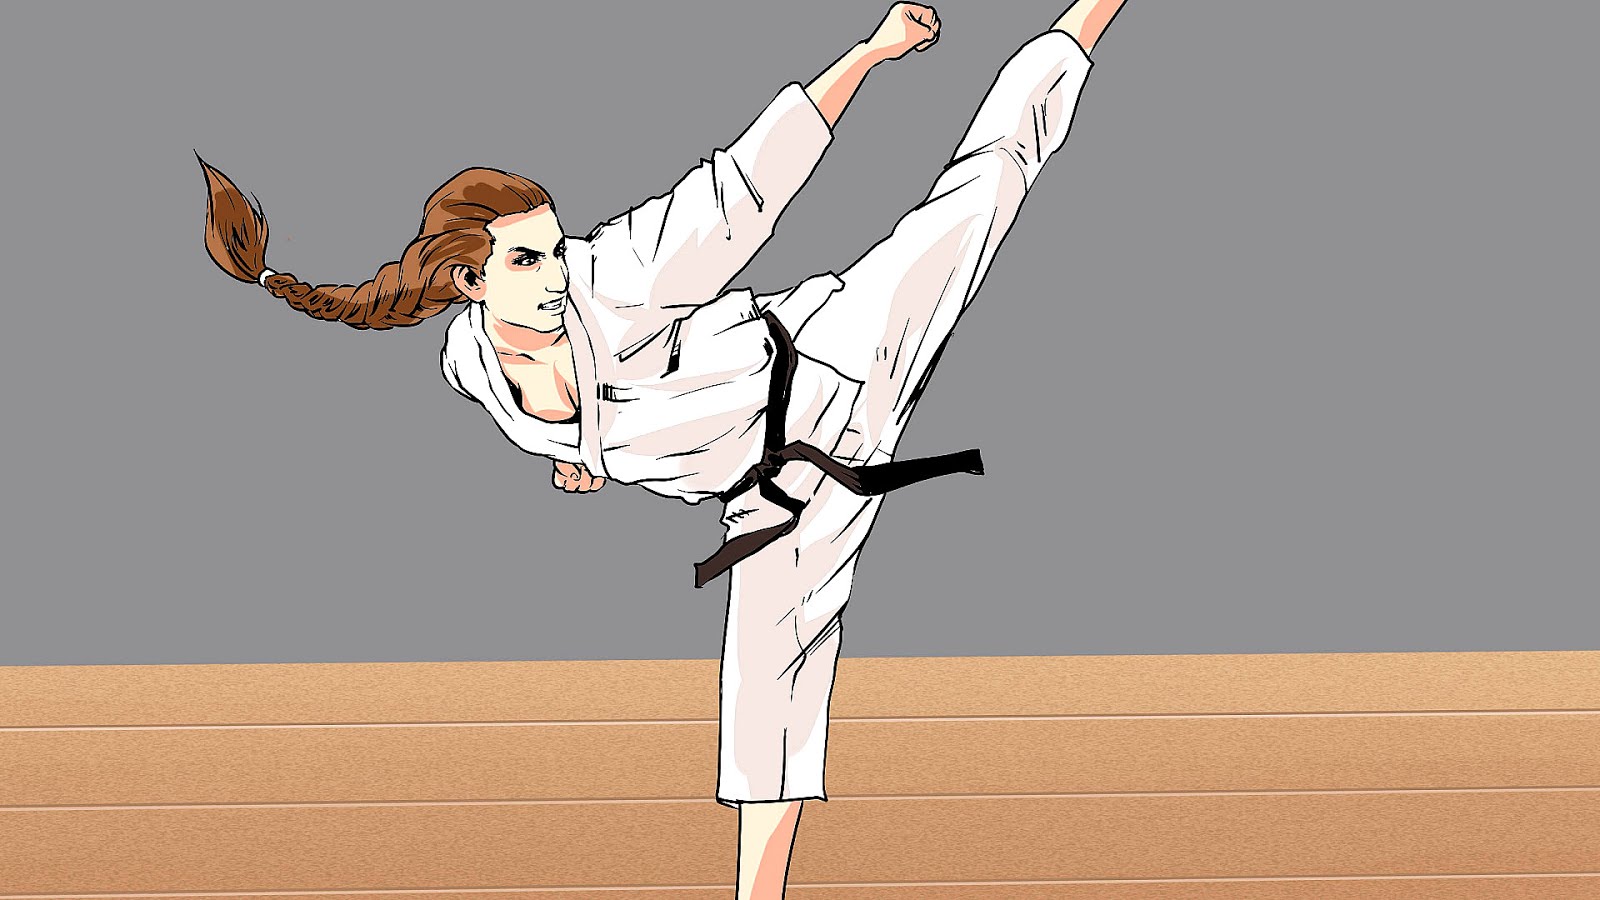 teaching karate moves